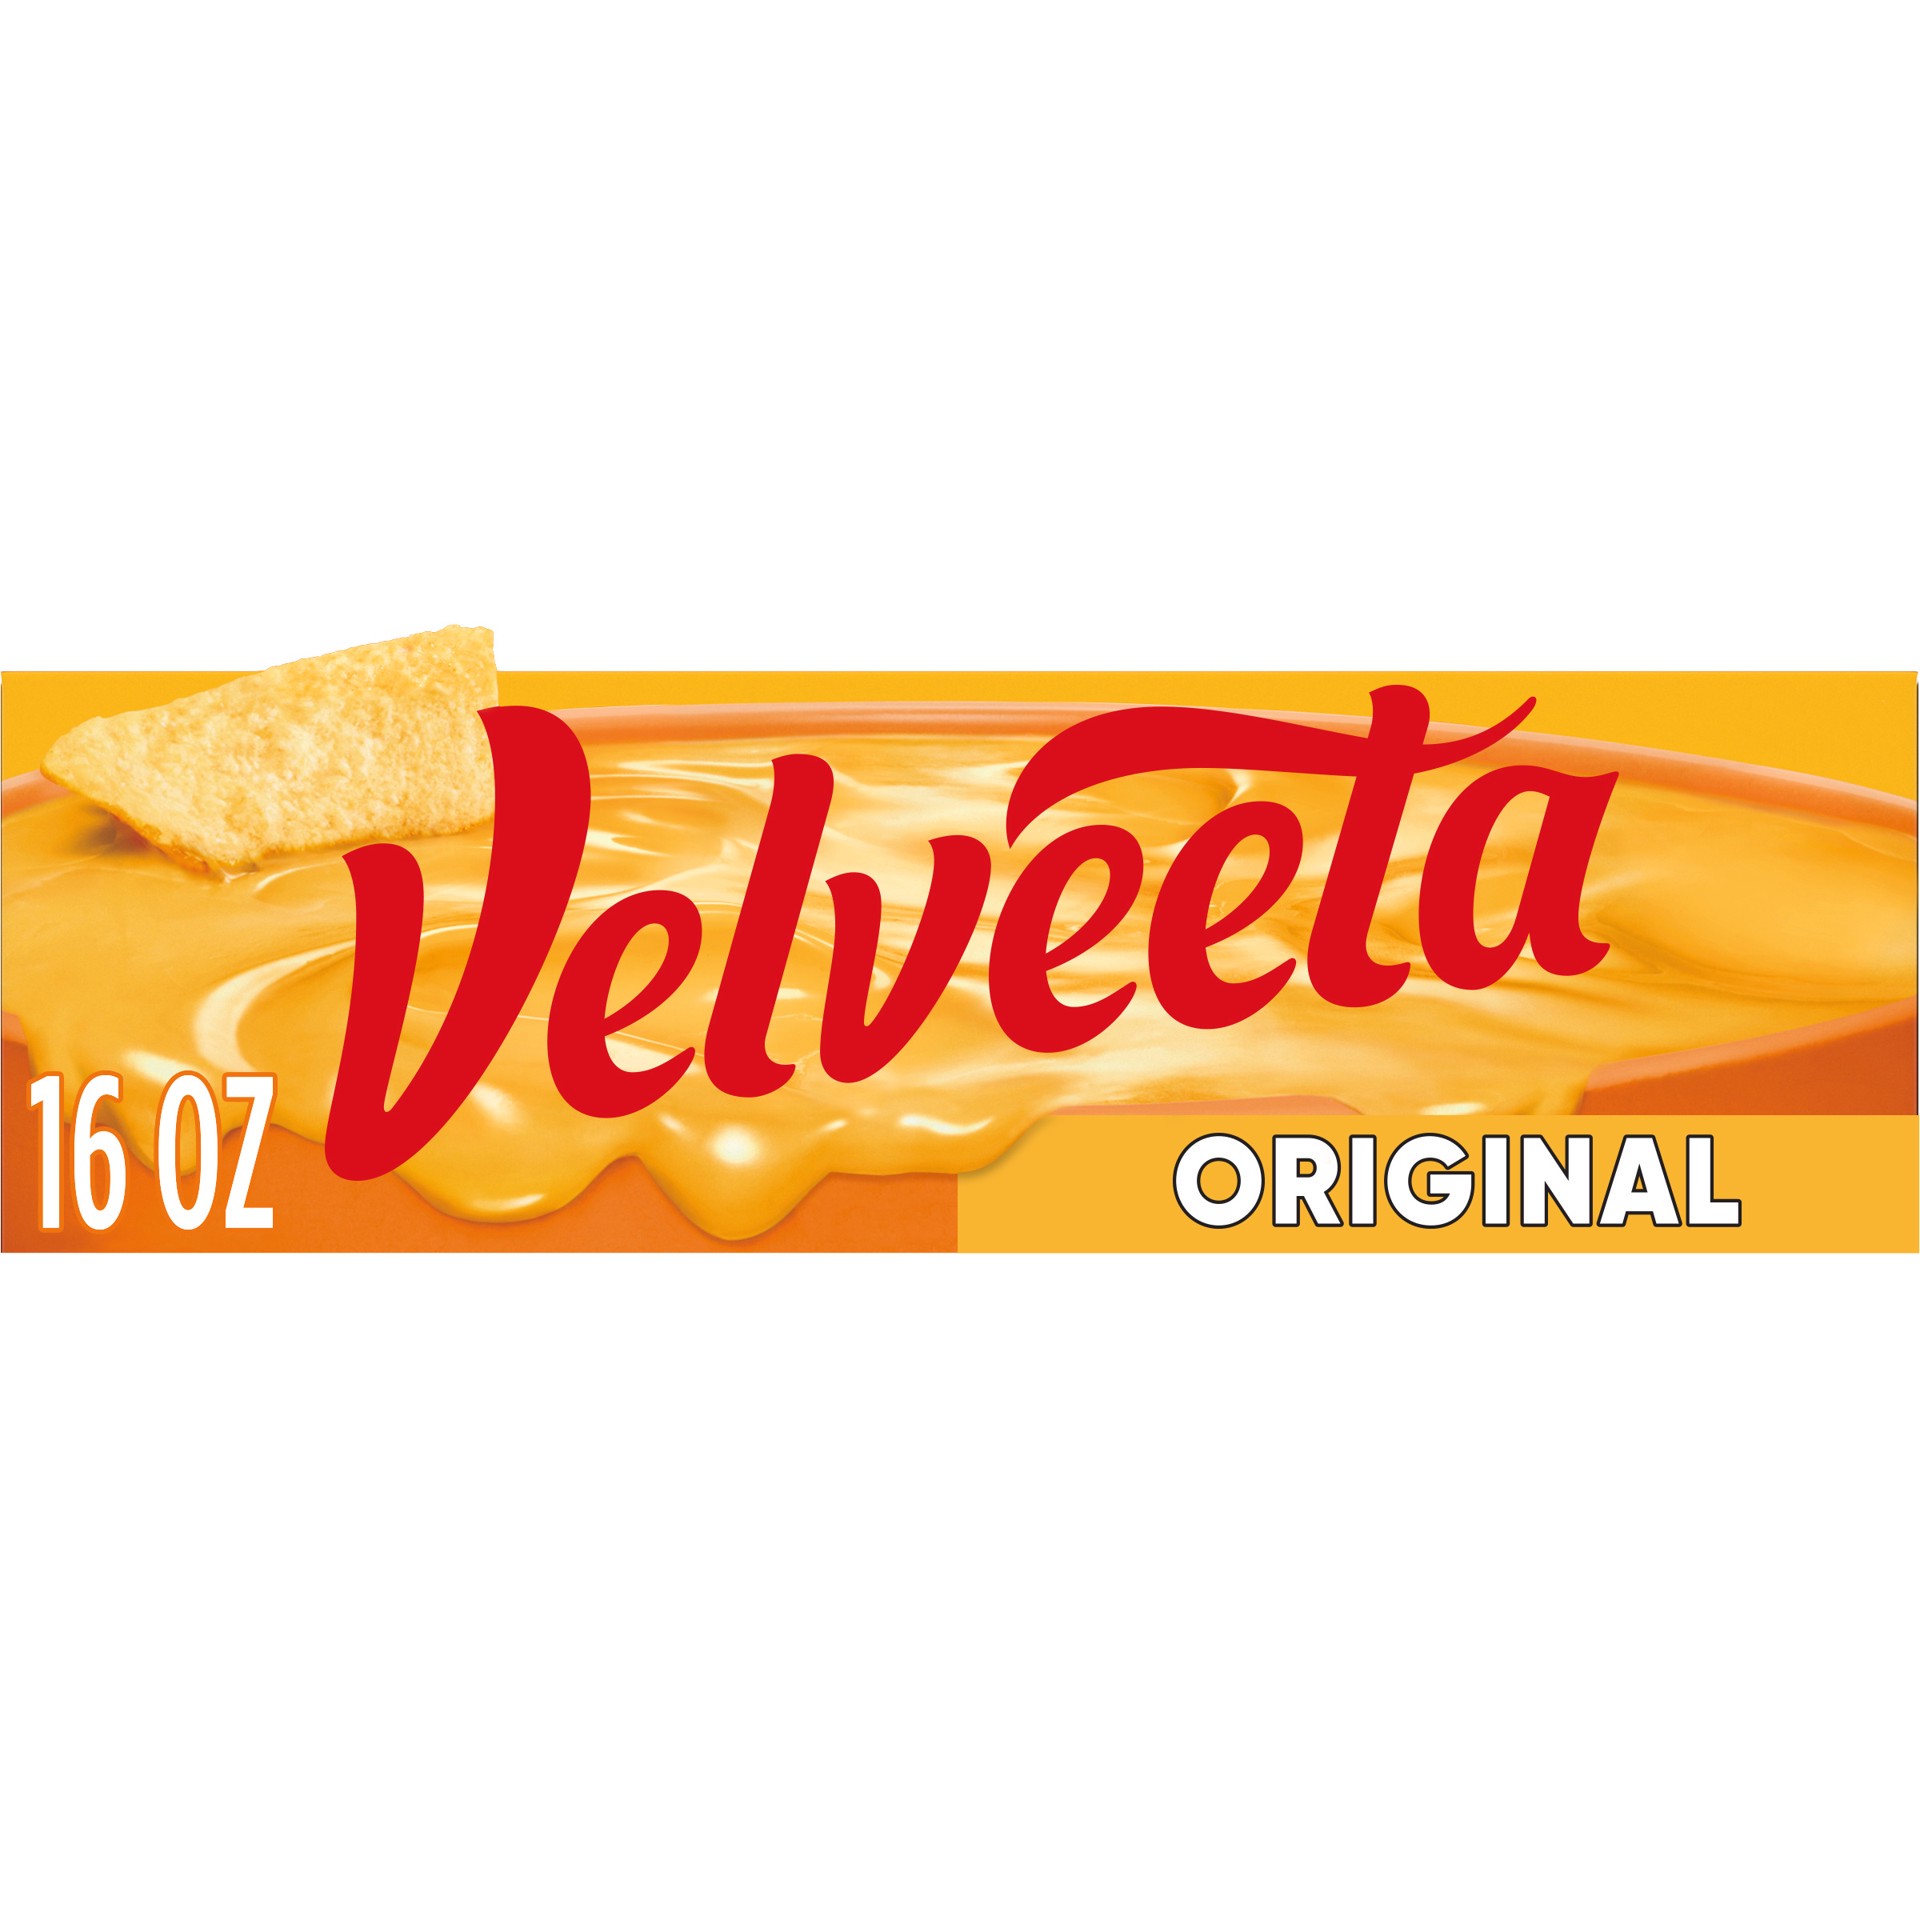 slide 1 of 9, Velveeta Original Pasteurized Recipe Cheese Product, 16 oz Block, 16 oz